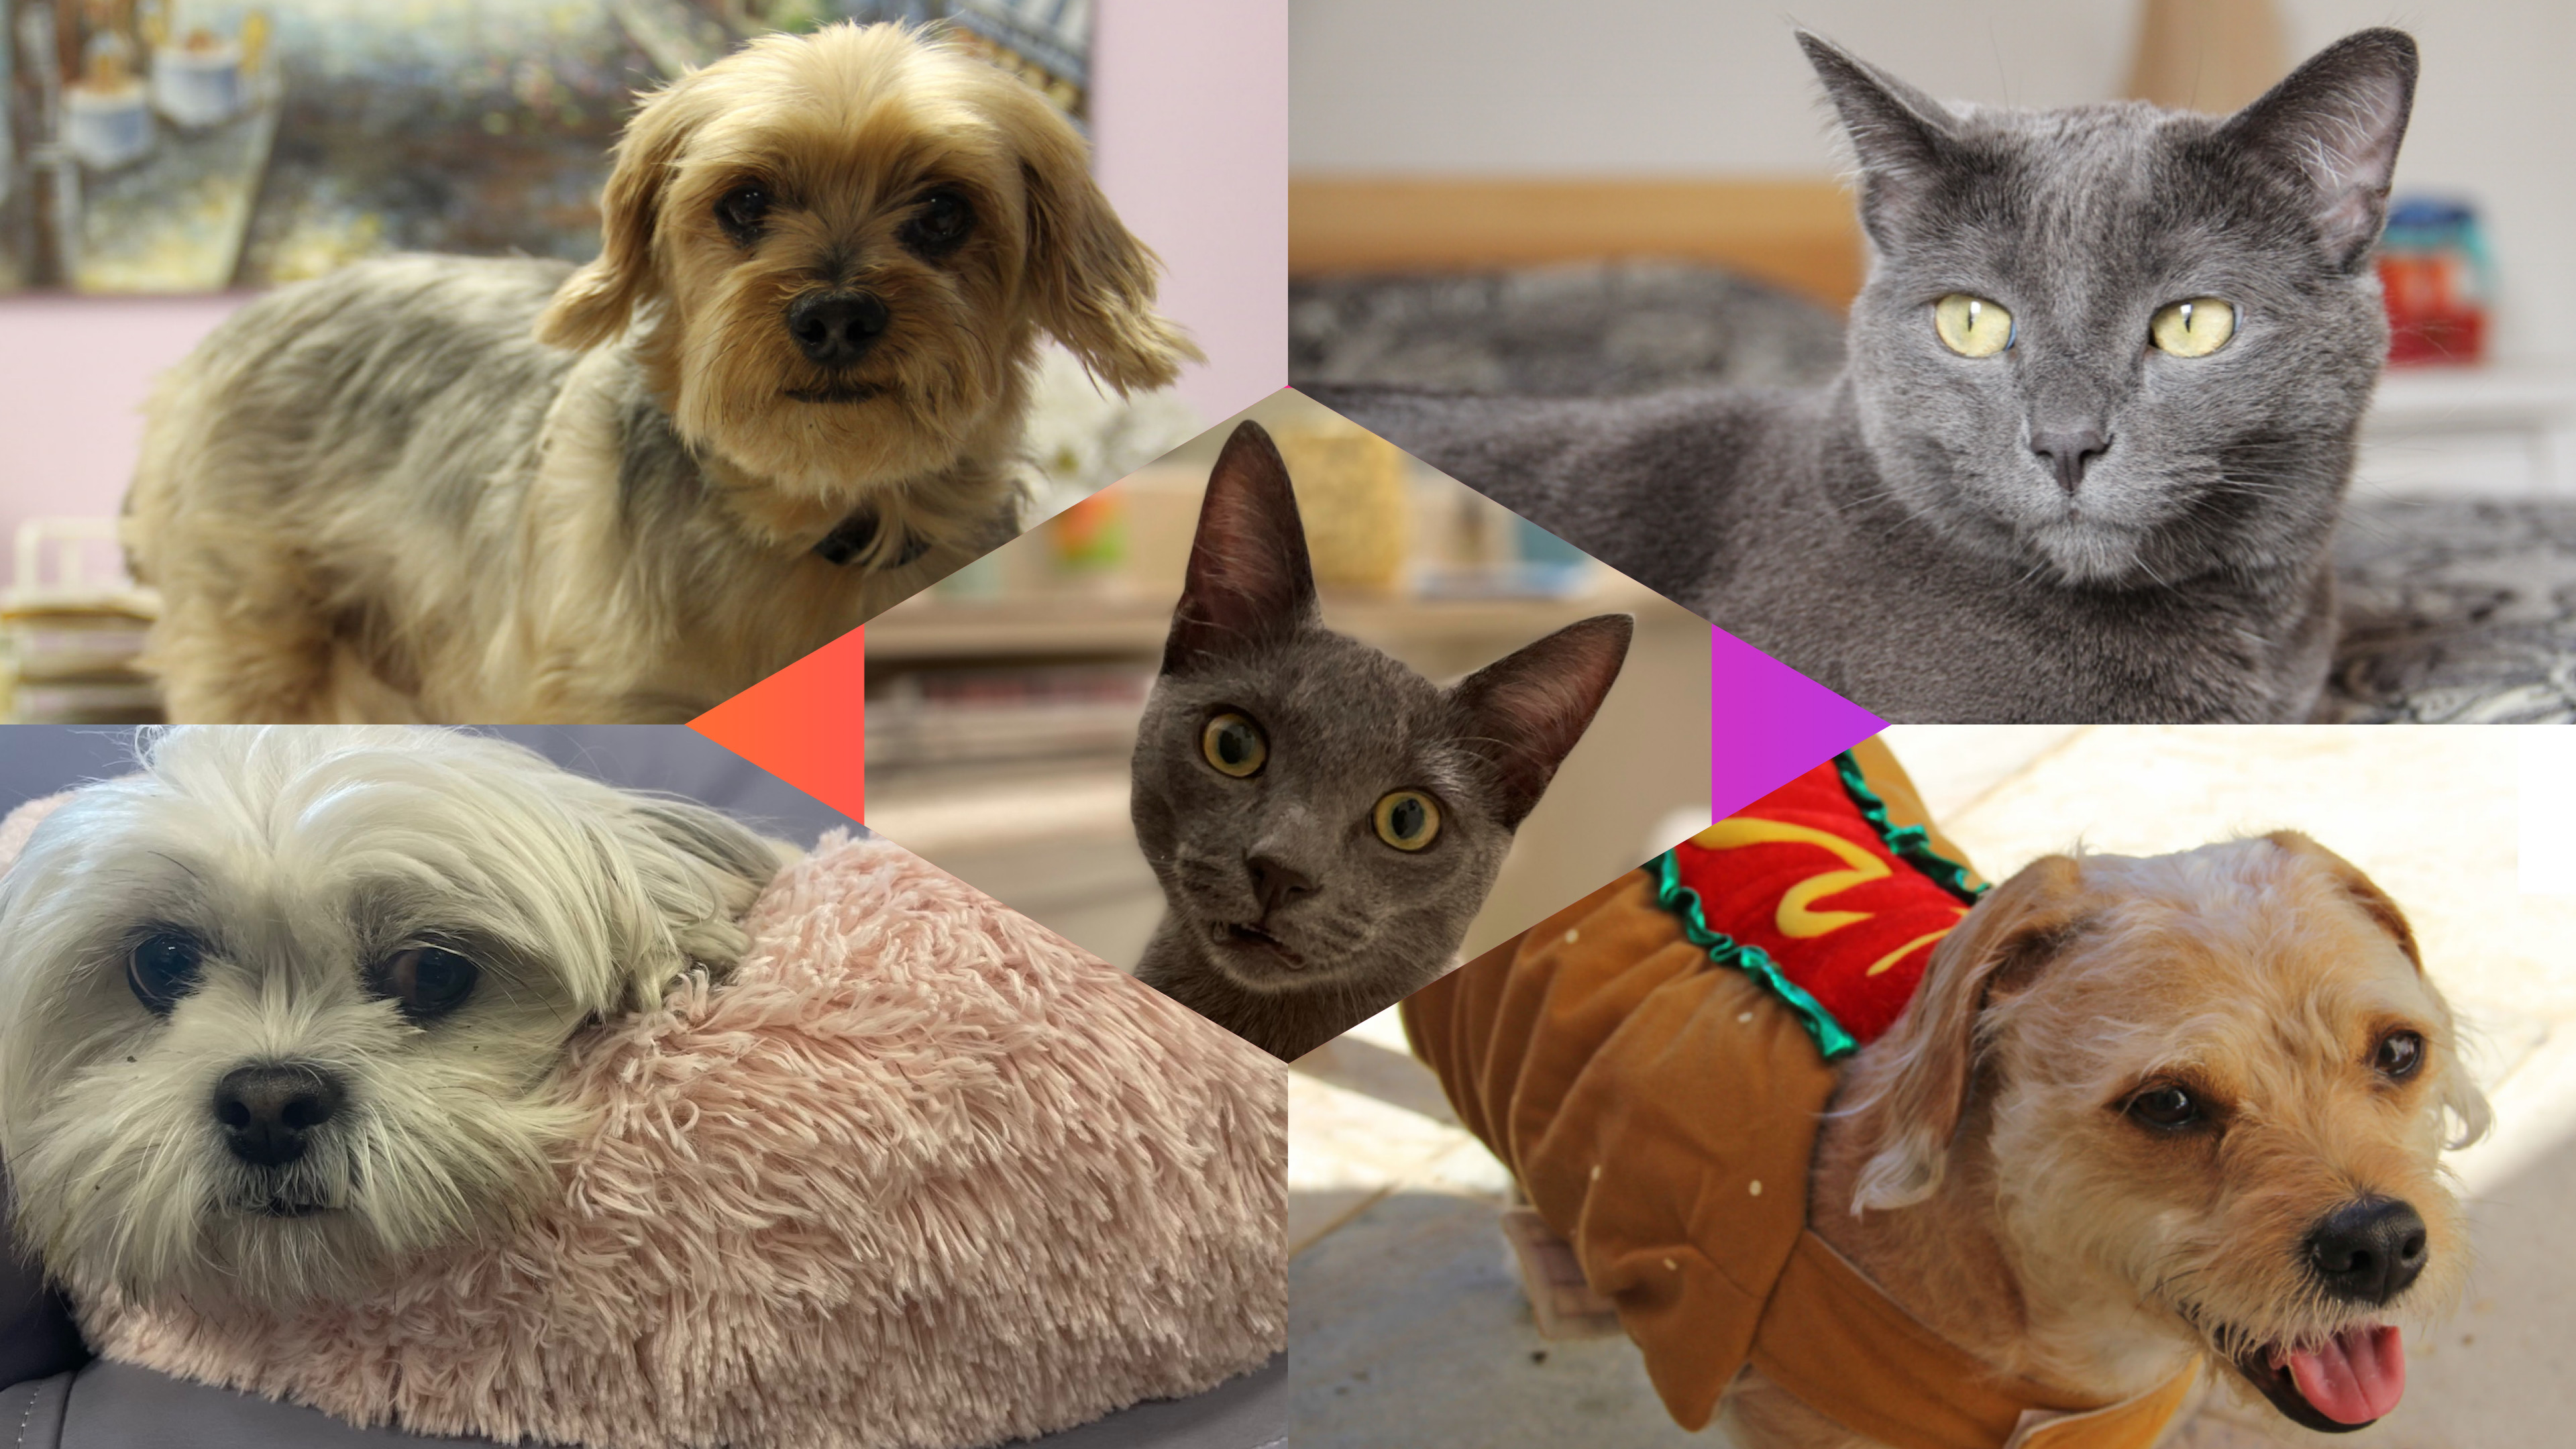 national adopt a shelter pet day, dog, dogs, kitten, kittens, terrier